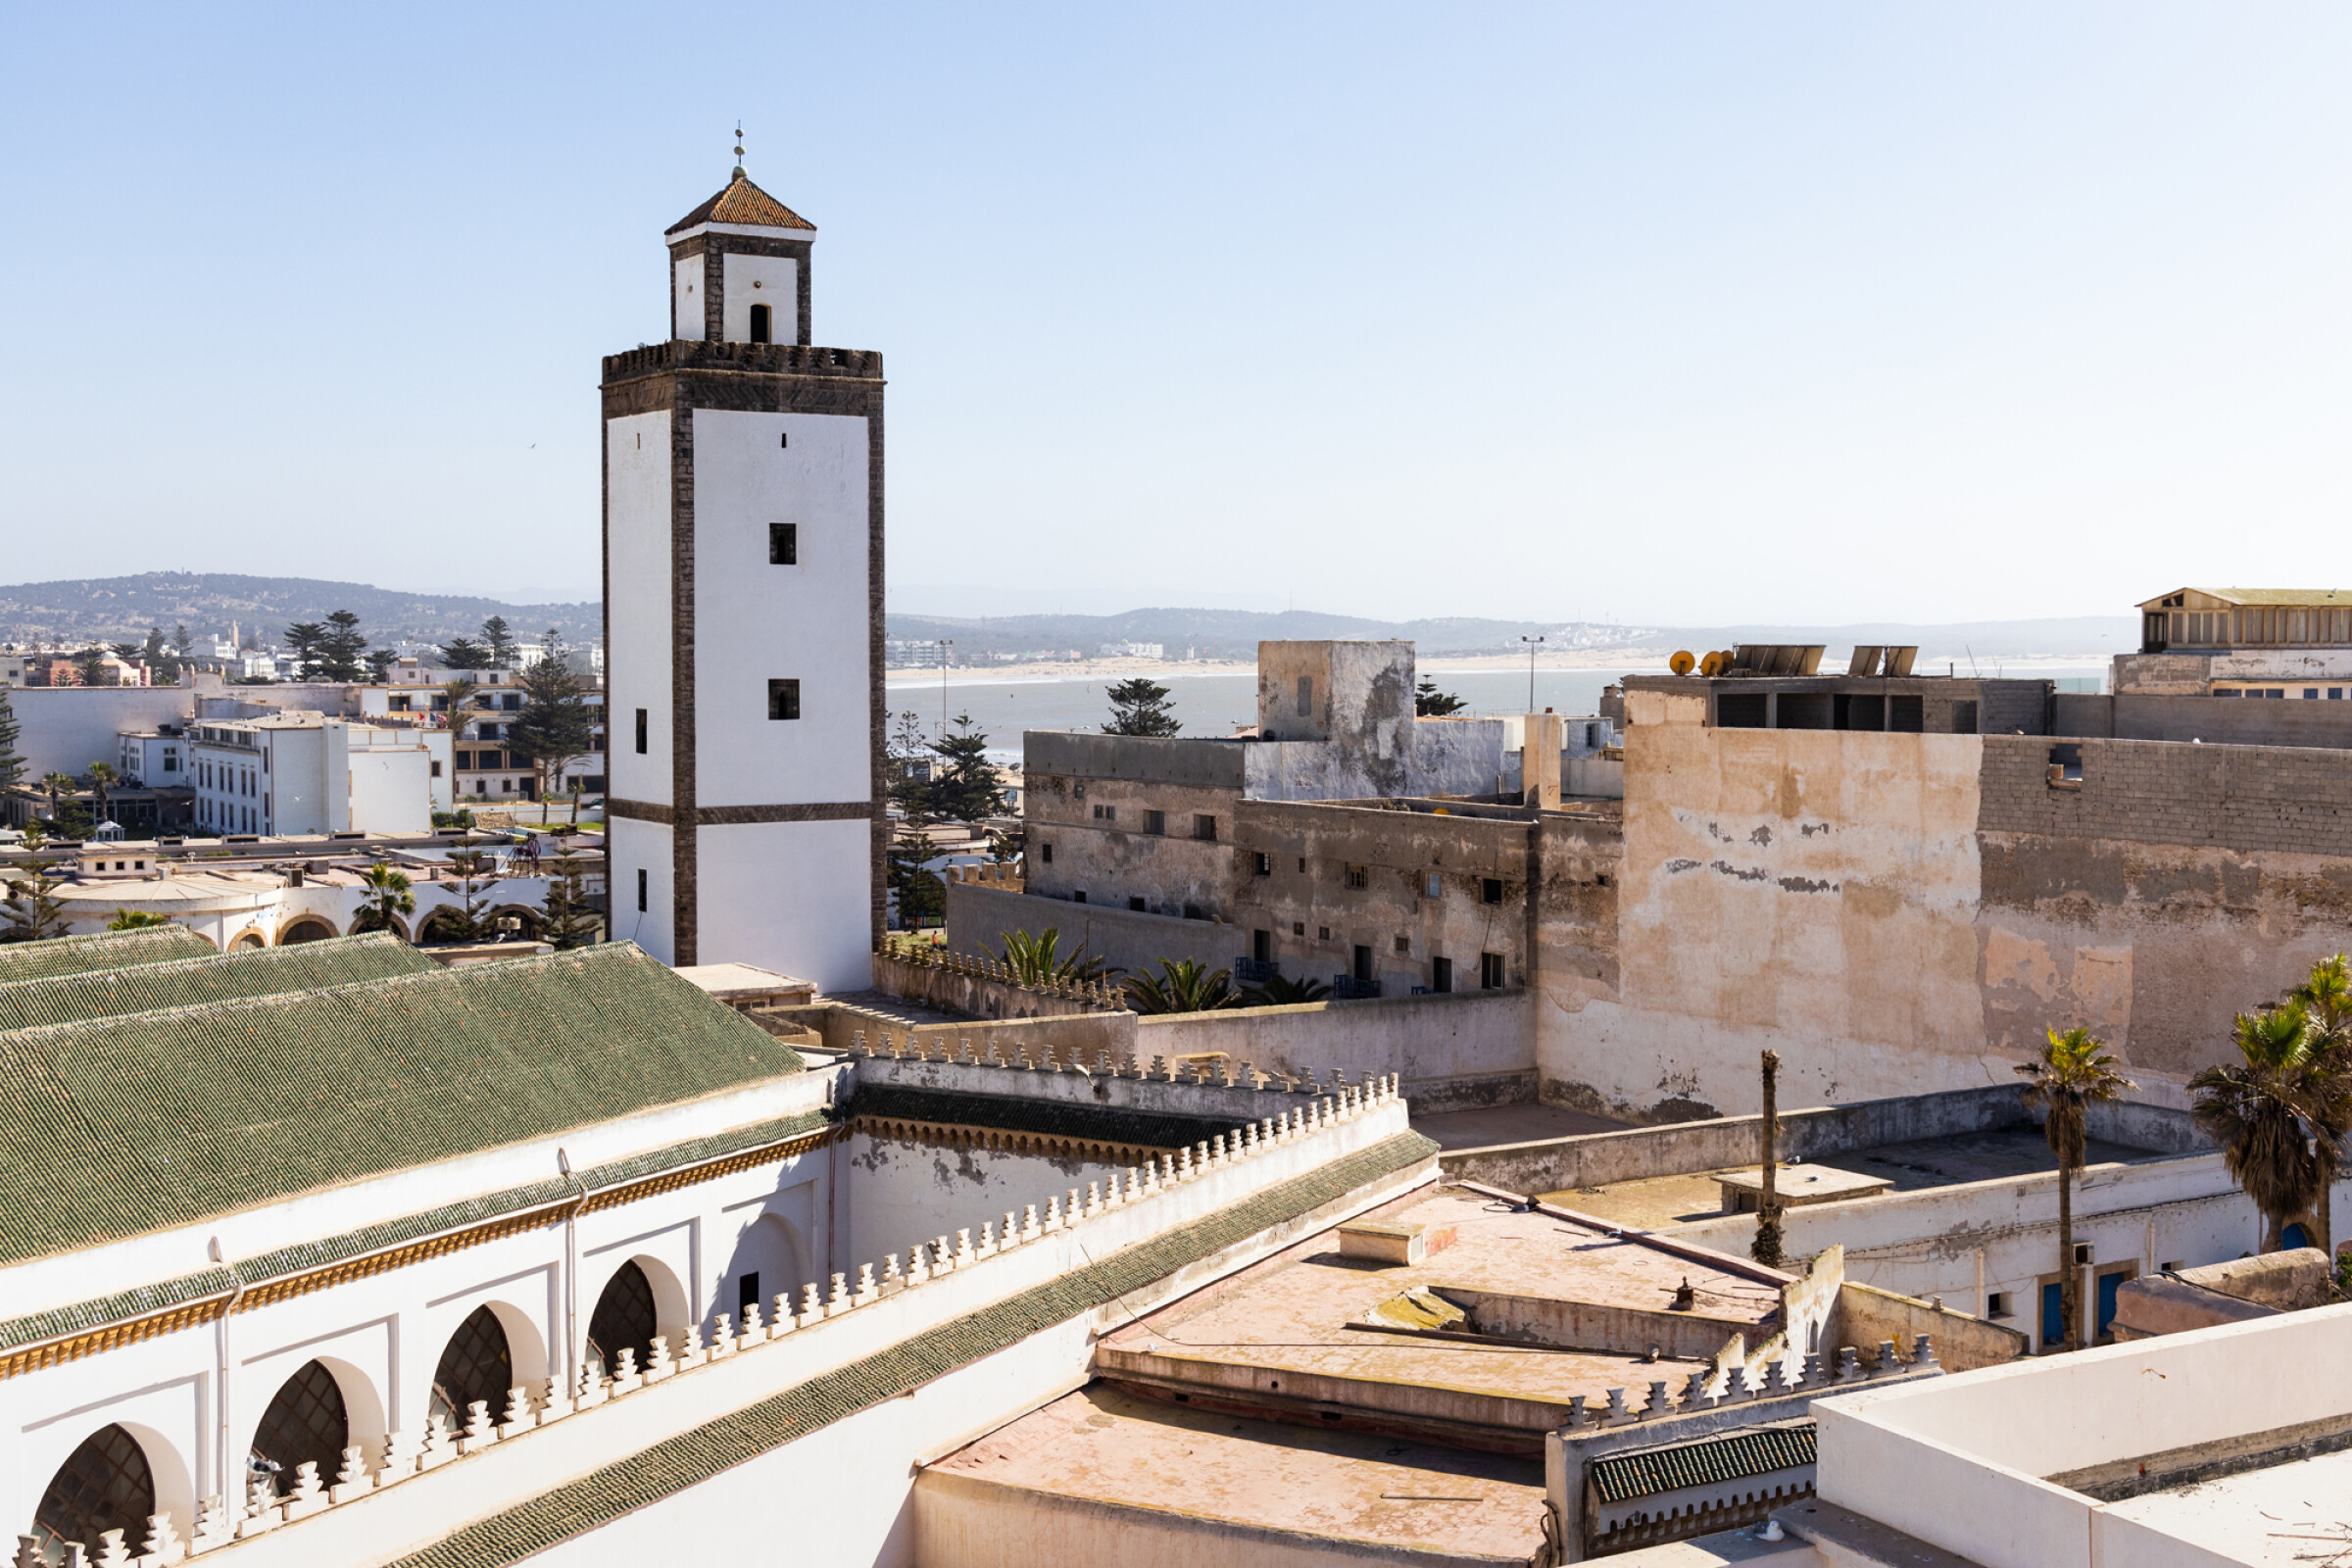 Celebrating Moussem Regraga 2022 in Essaouira